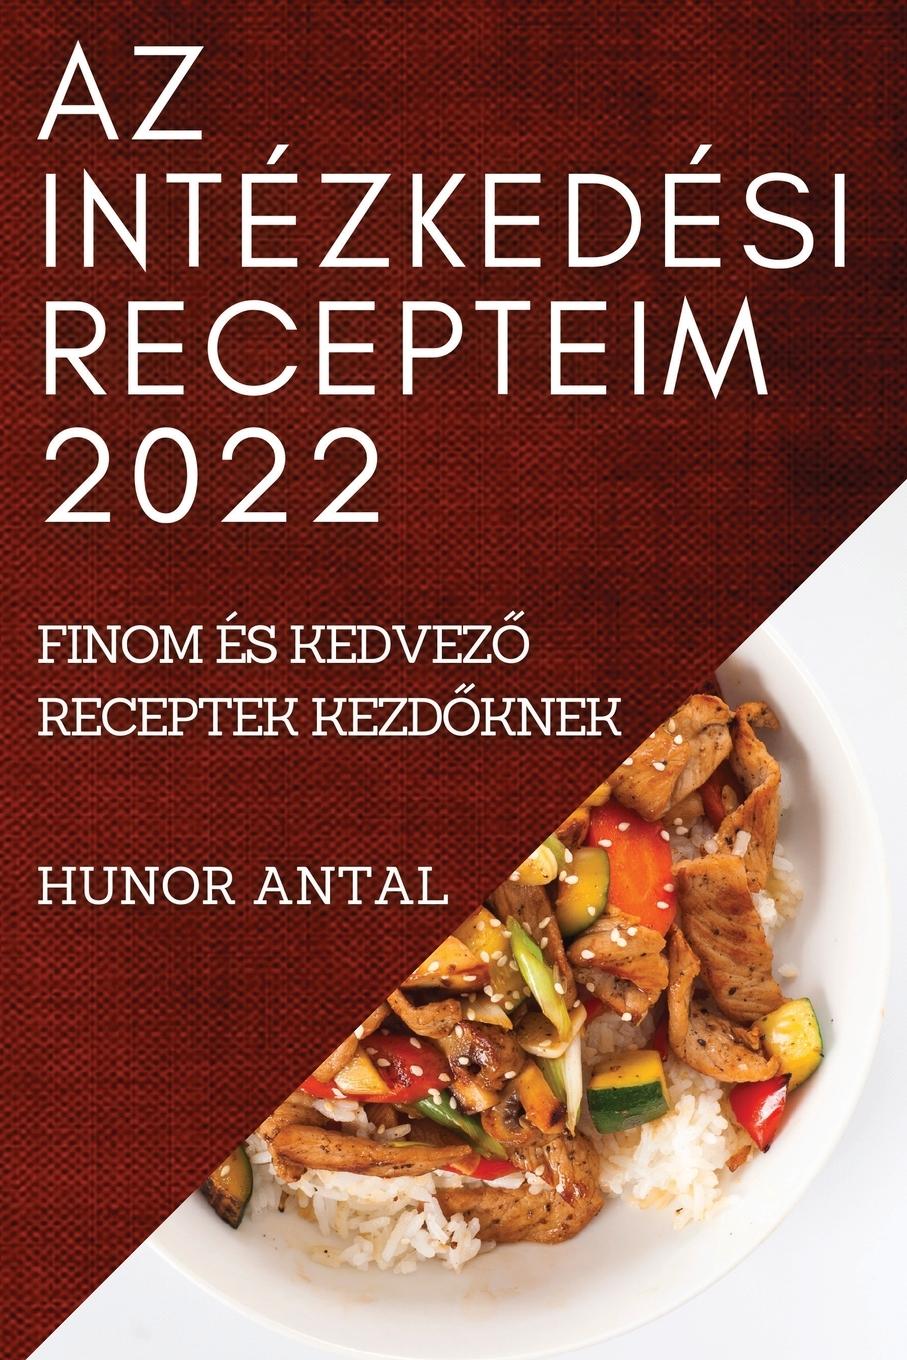 Kniha AZ Intezkedesi Recepteim 2022 